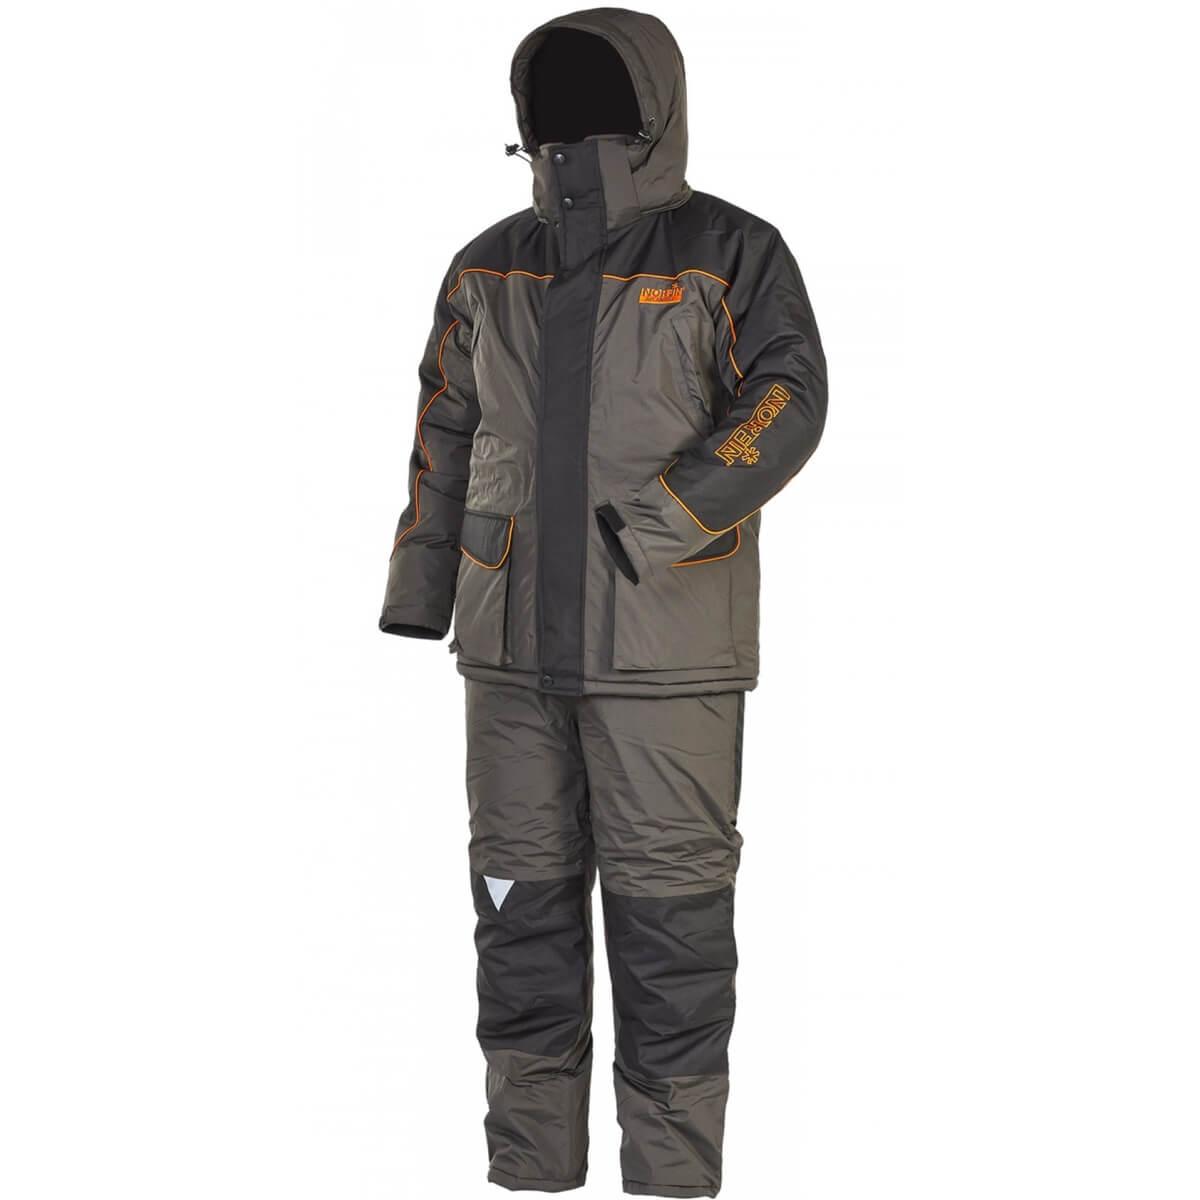 Зимний мембранный костюм Norfin ATLANTIS+ -45°/ 6000мм Серый р. S (448001-S)